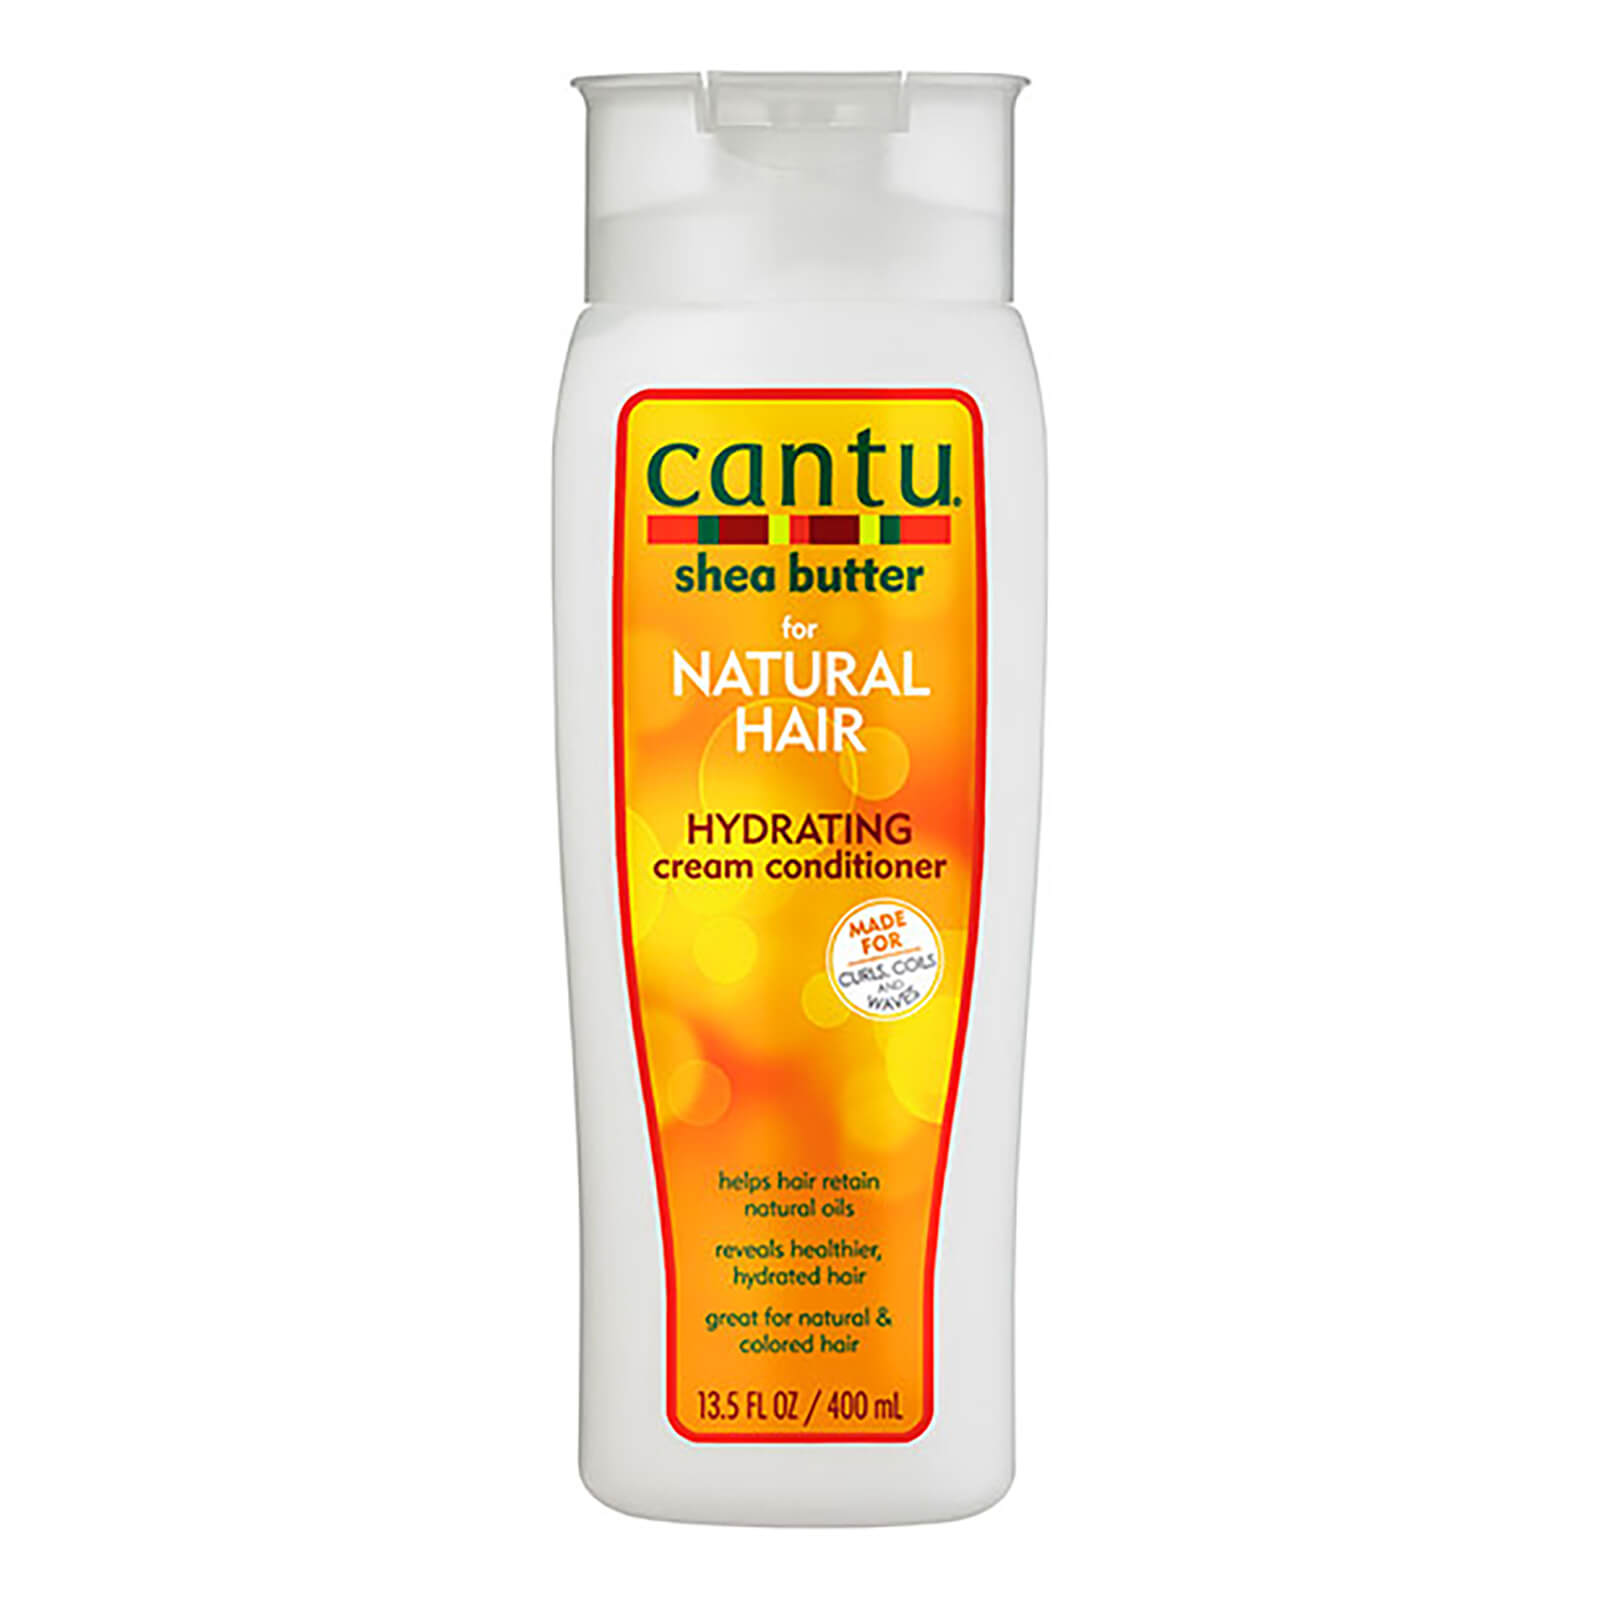 cantu hair products